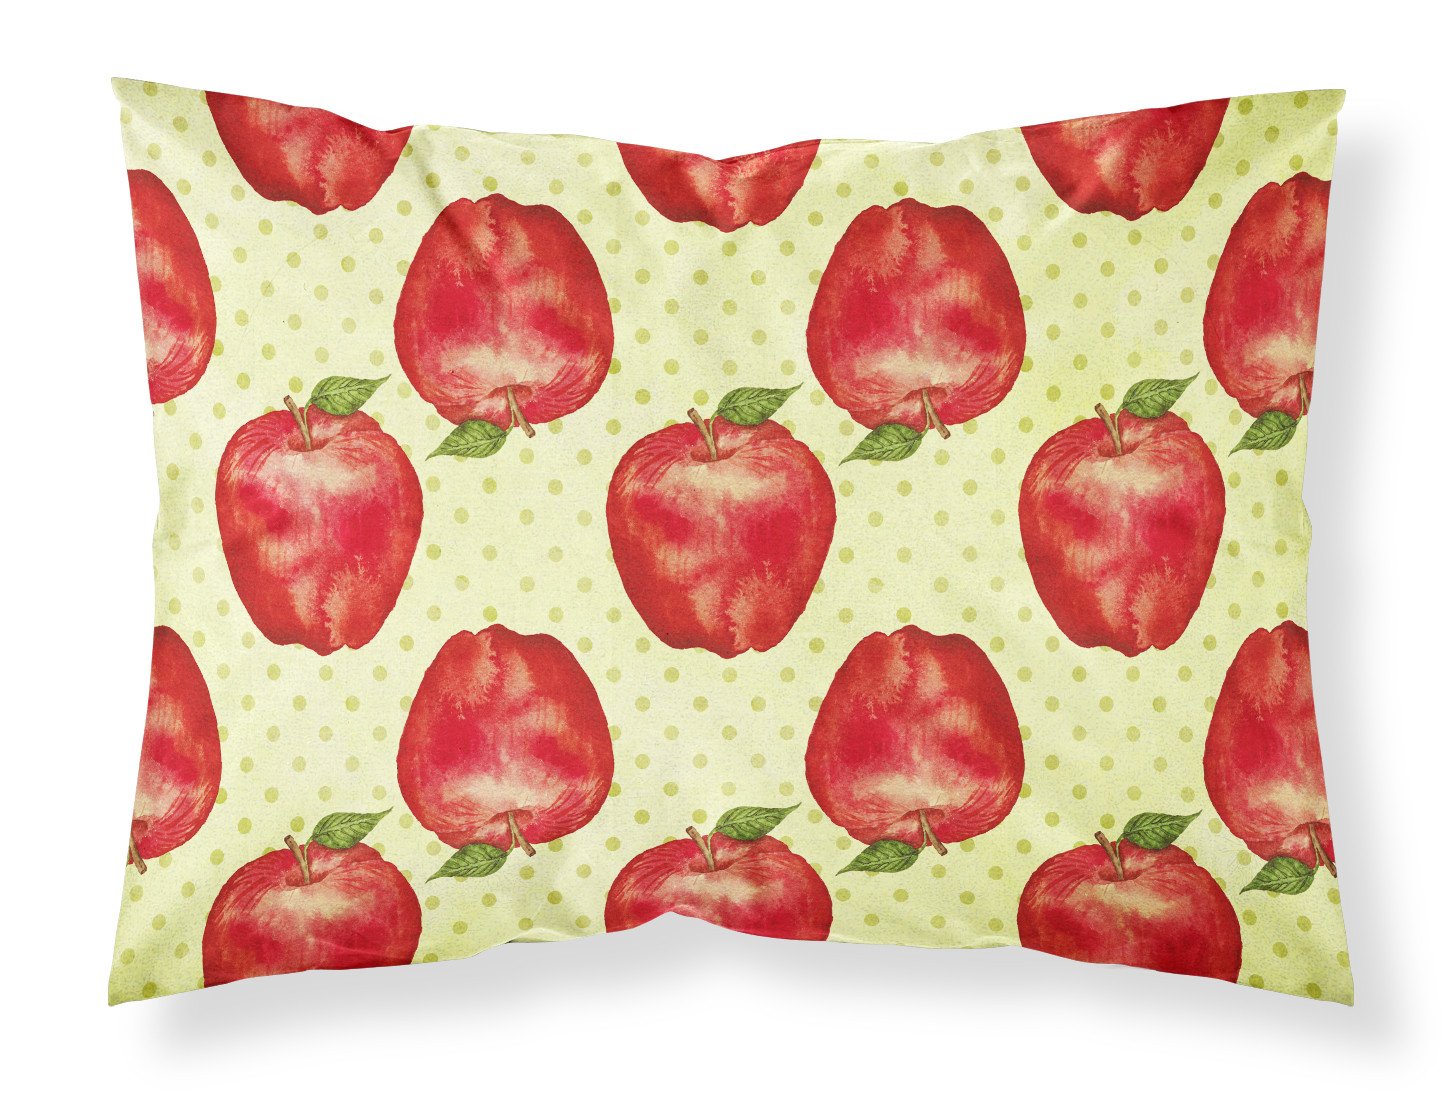 Watercolor Apples and Polkadots Fabric Standard Pillowcase BB7516PILLOWCASE by Caroline's Treasures